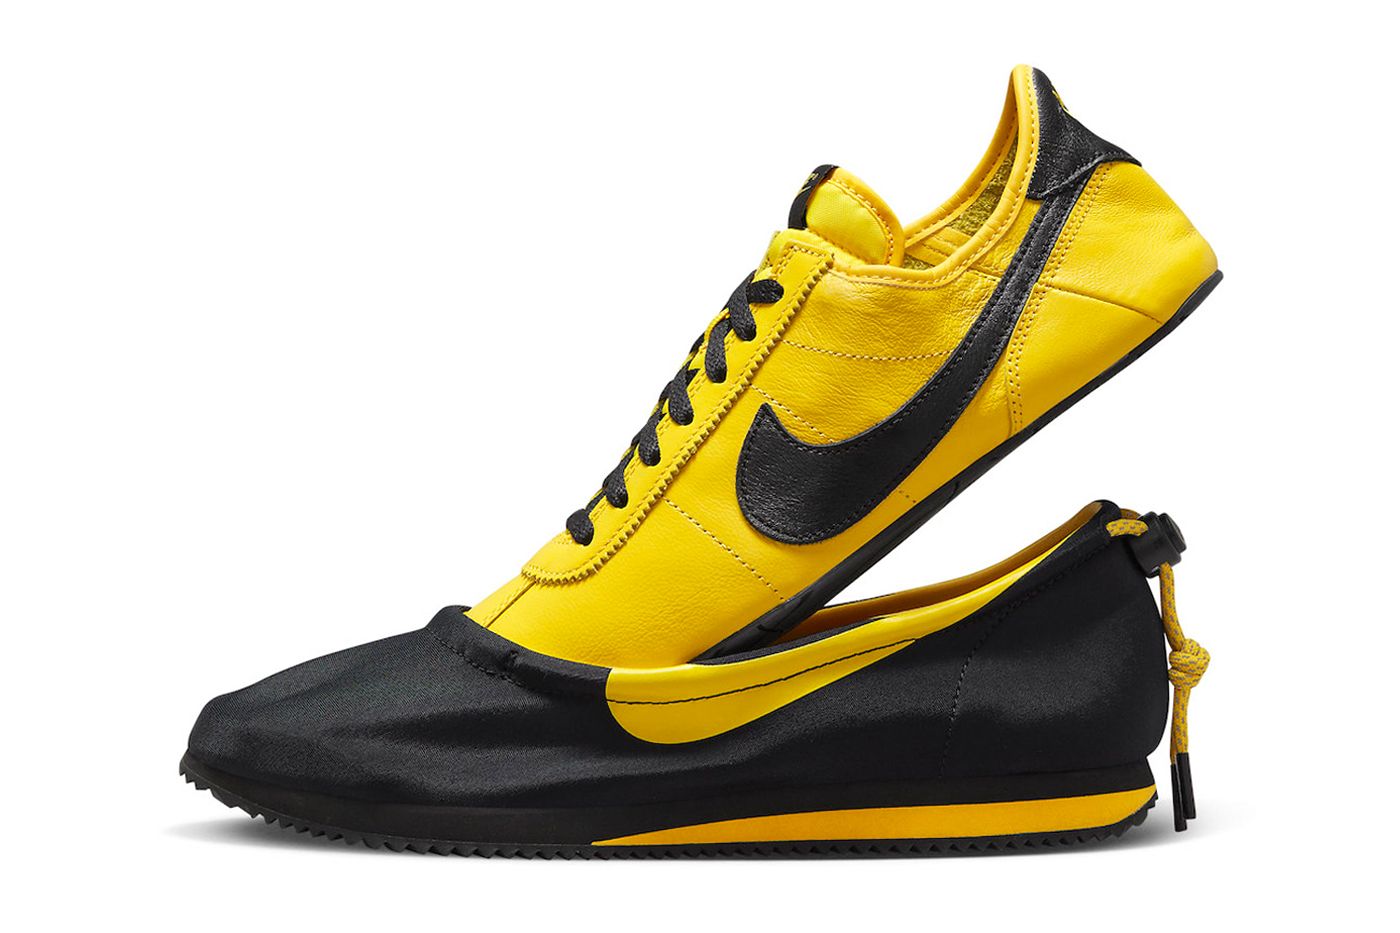 CLOT x Nike "CLOTEZ" "Bruce Lee"